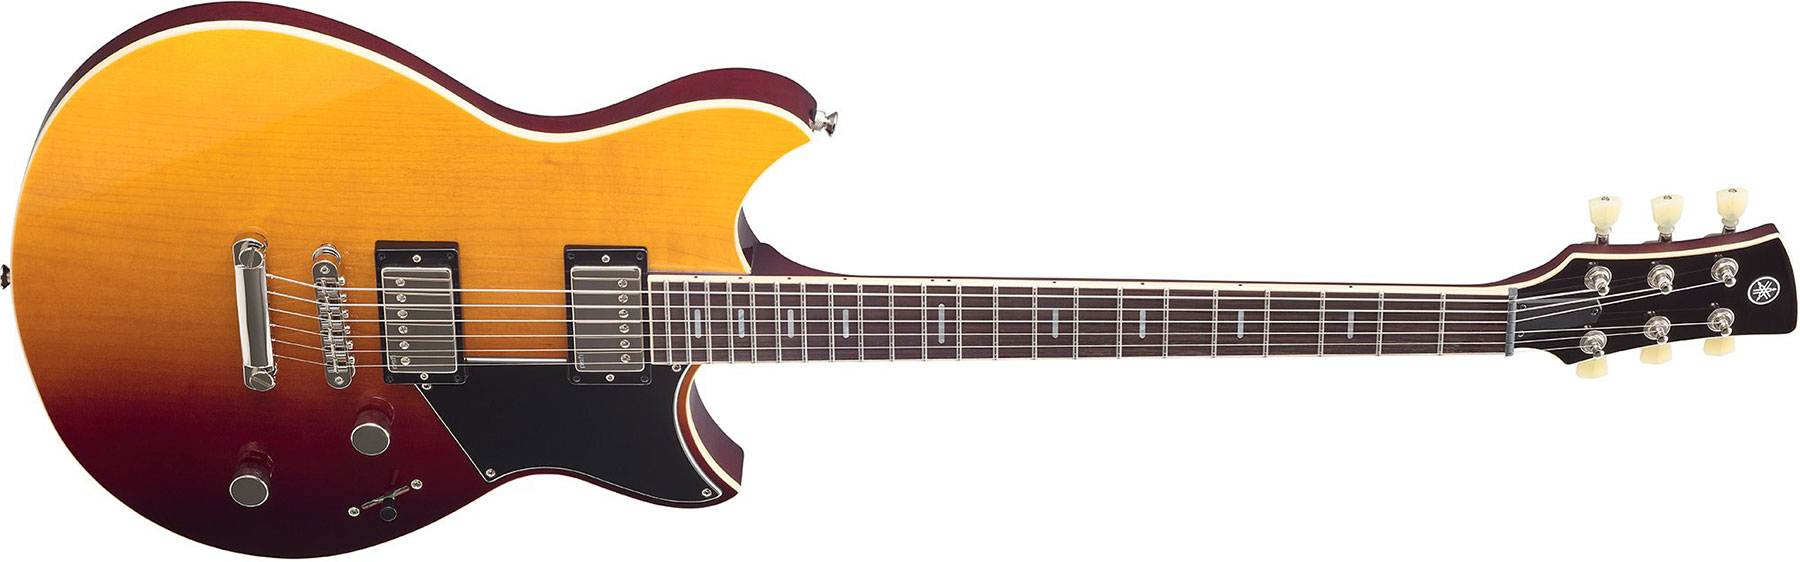 Yamaha Rss20 Revstar Standard Hh Ht Rw - Sunset Sunburst - Guitarra eléctrica de doble corte - Variation 1